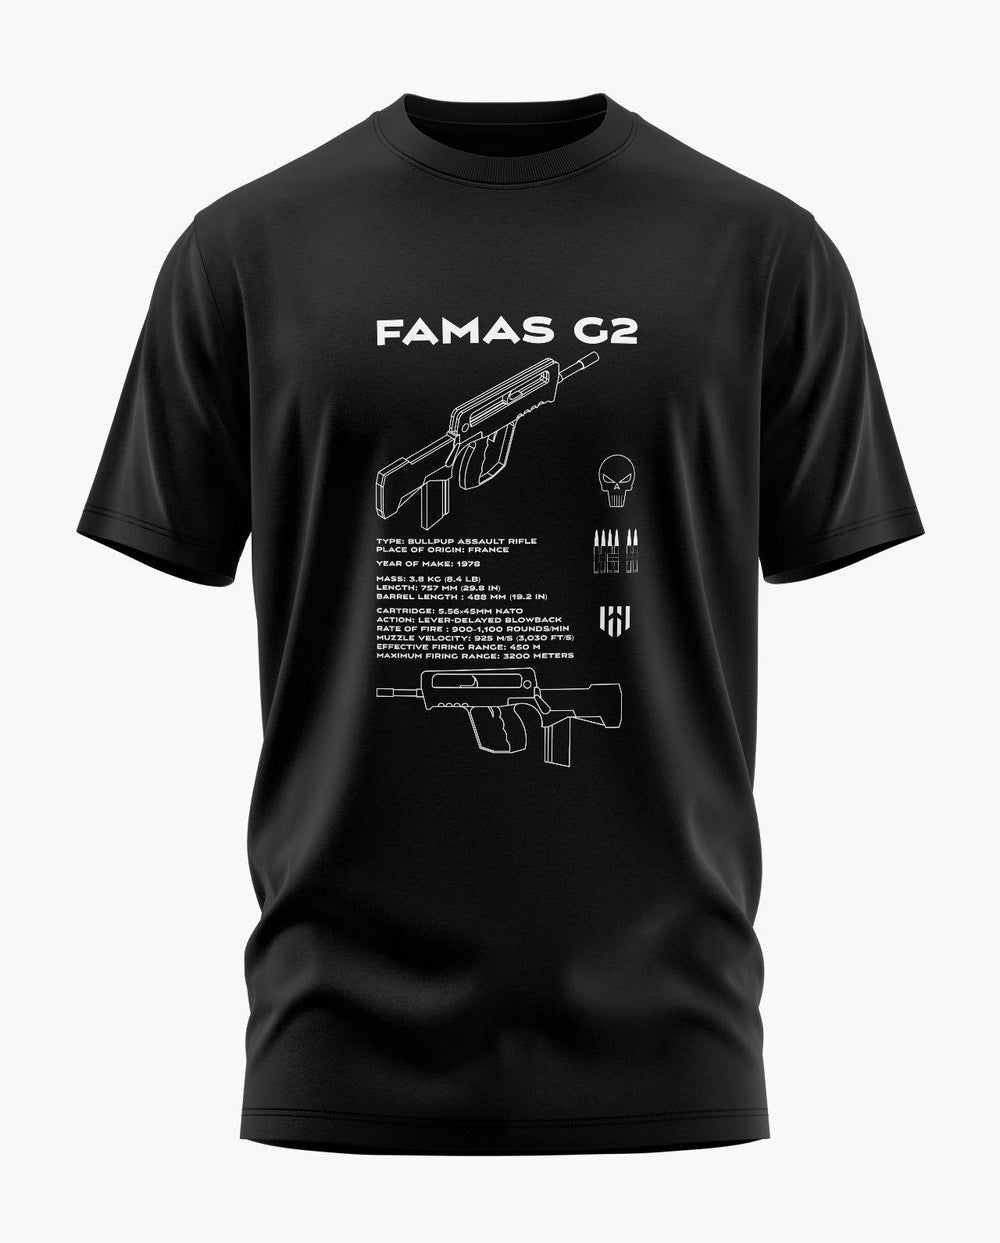 Famas G2 Blueprint T-Shirt - Aero Armour